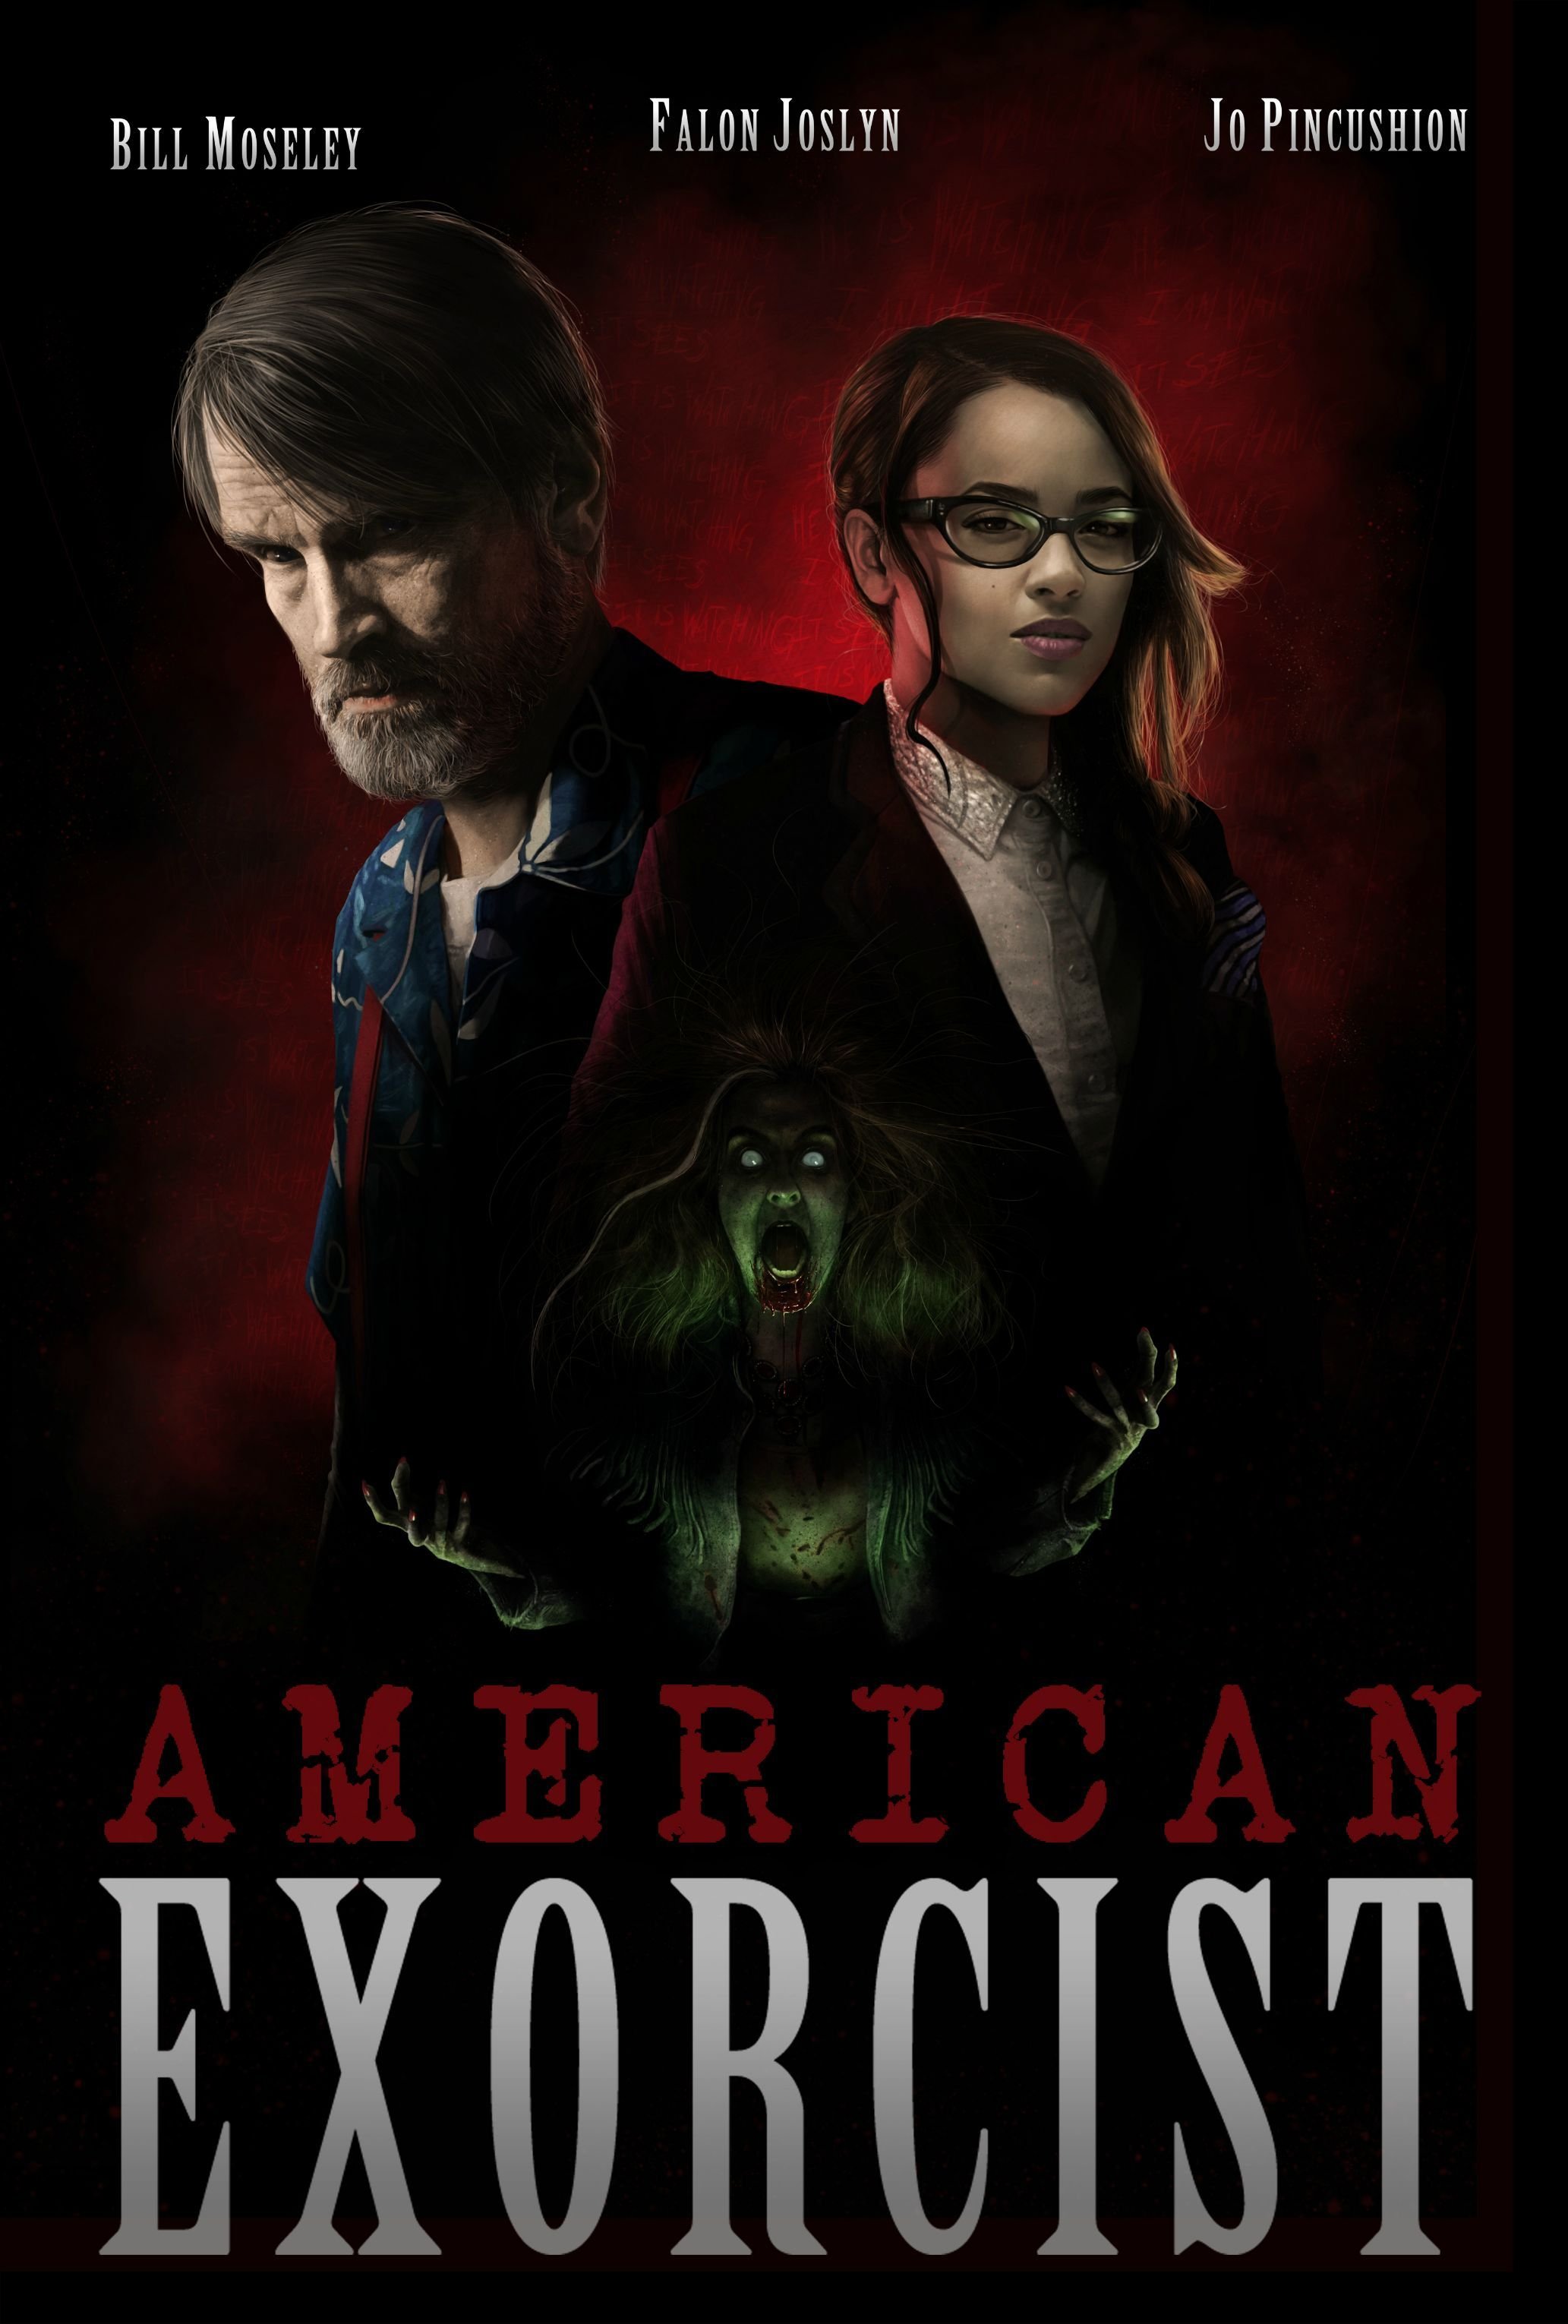 Nonton film American Exorcist layarkaca21 indoxx1 ganool online streaming terbaru